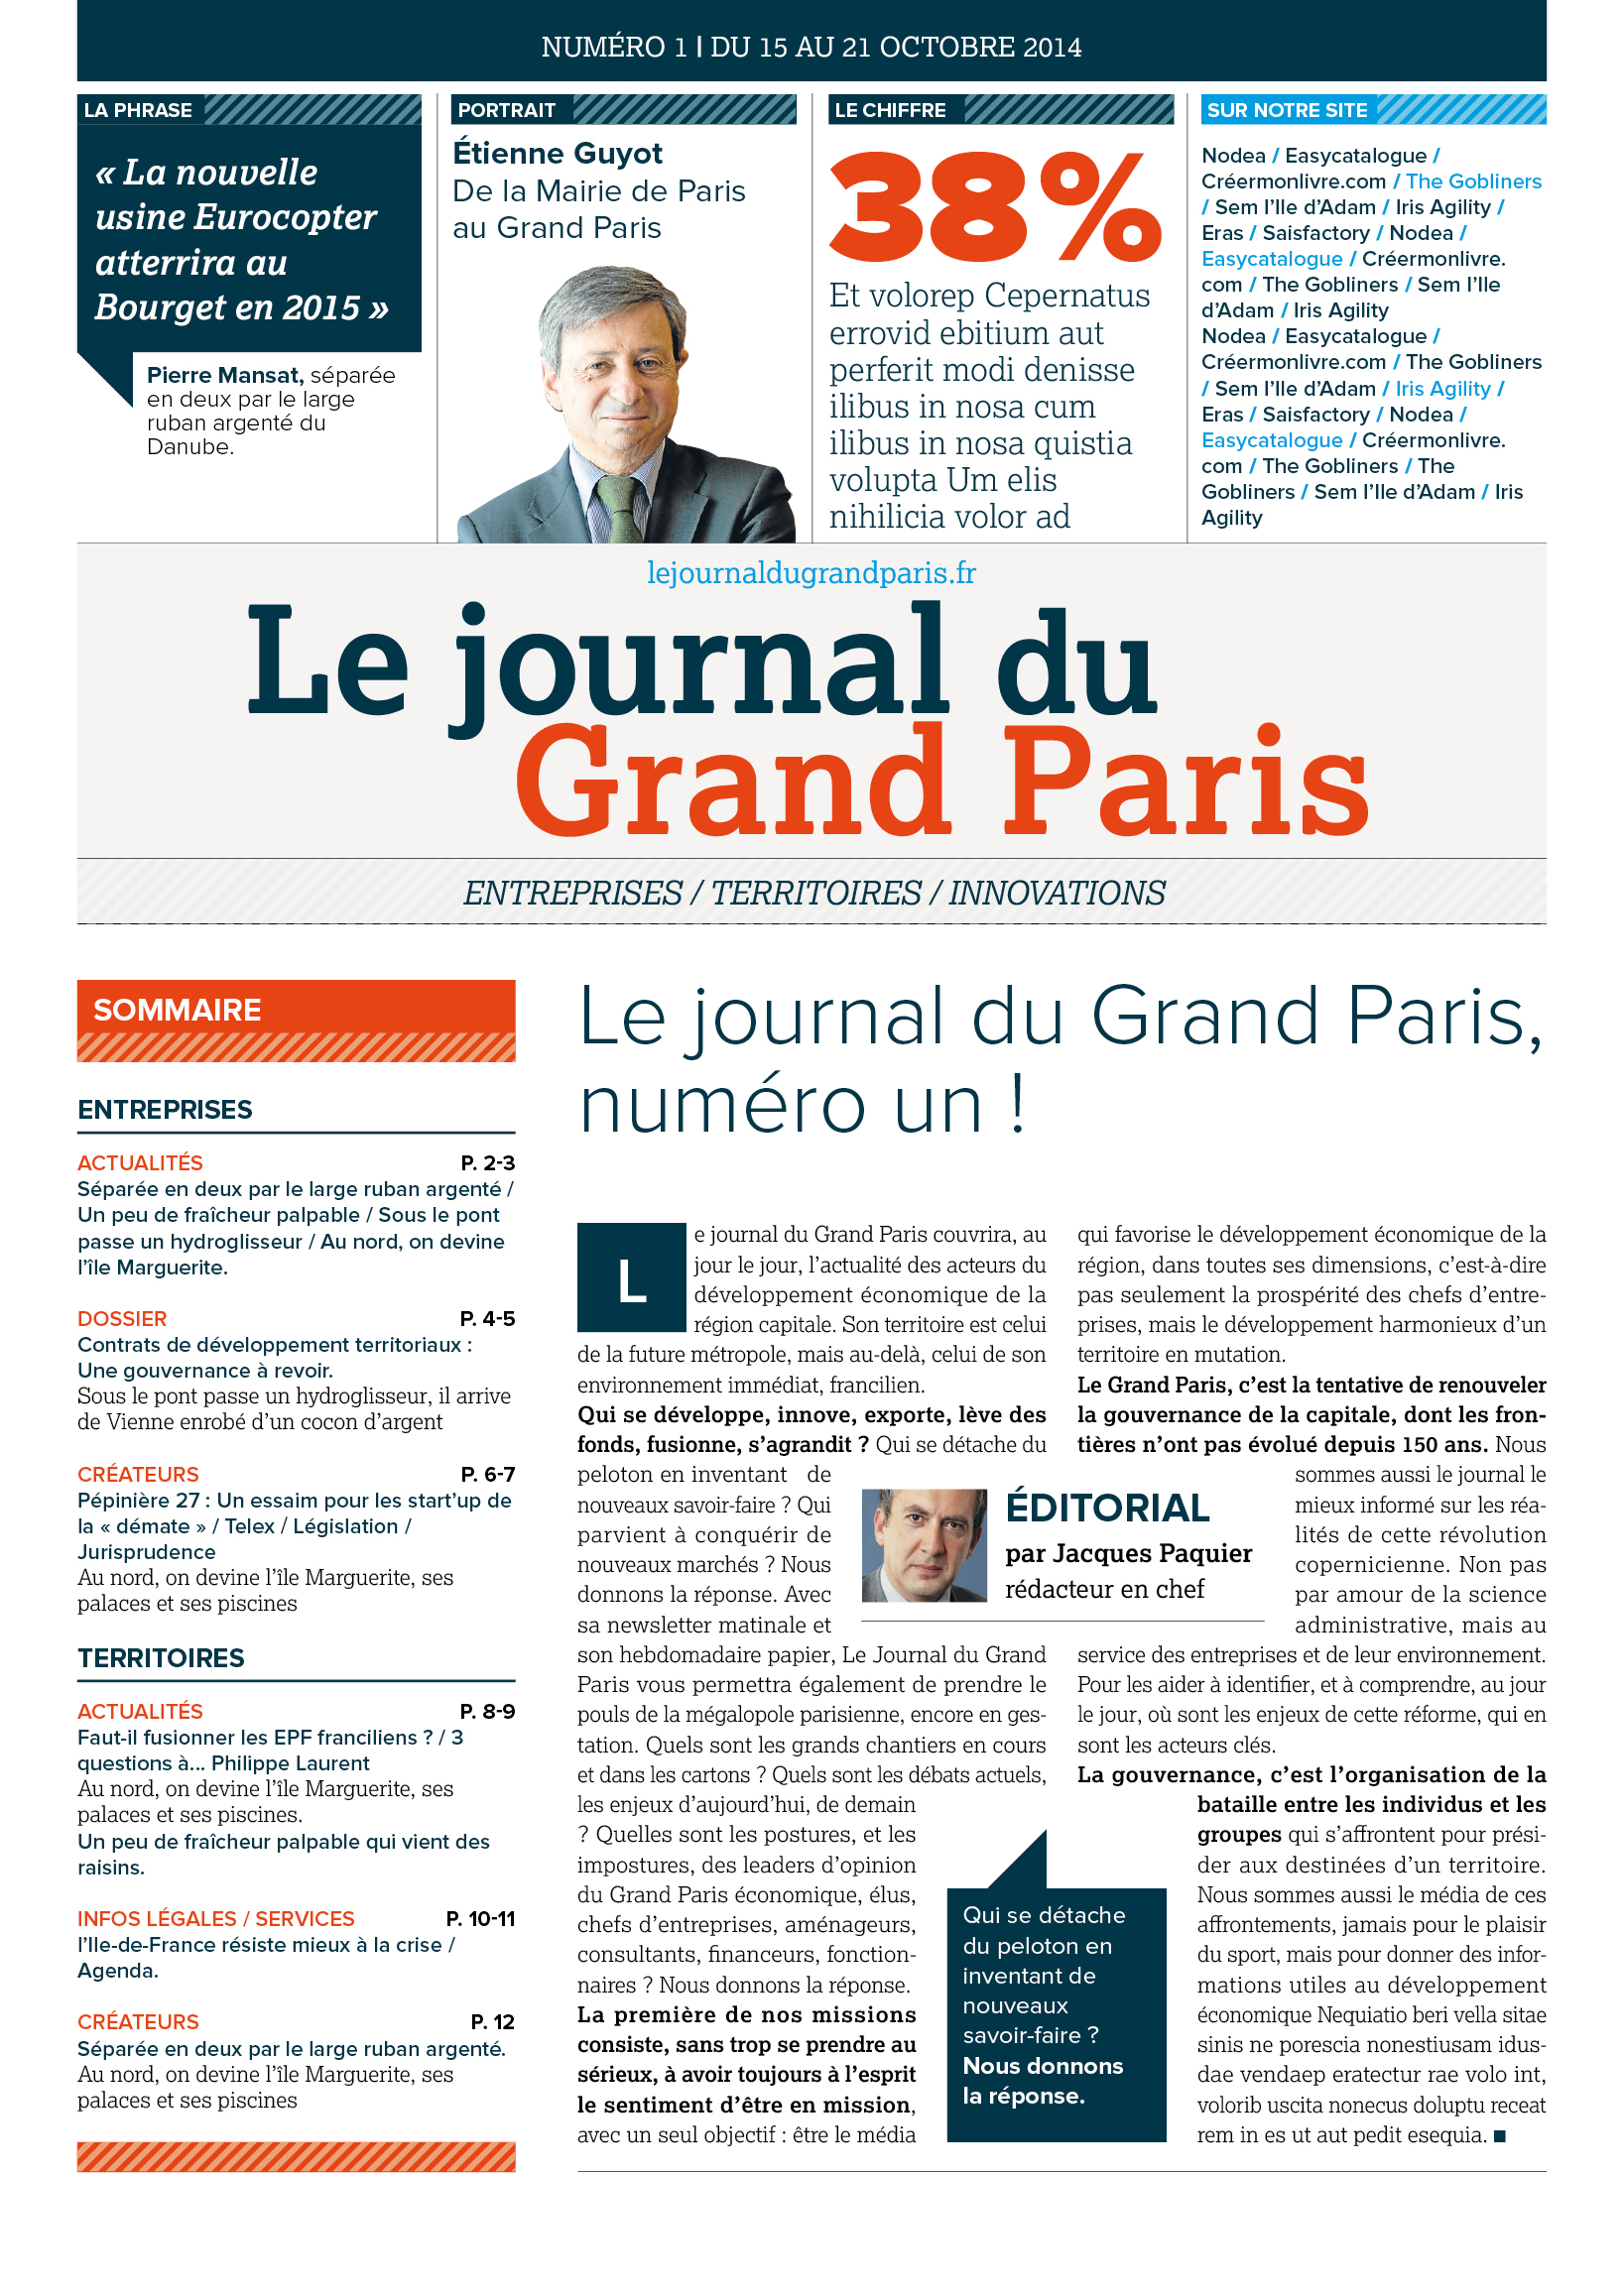 Journal du Grand Paris - Print_1